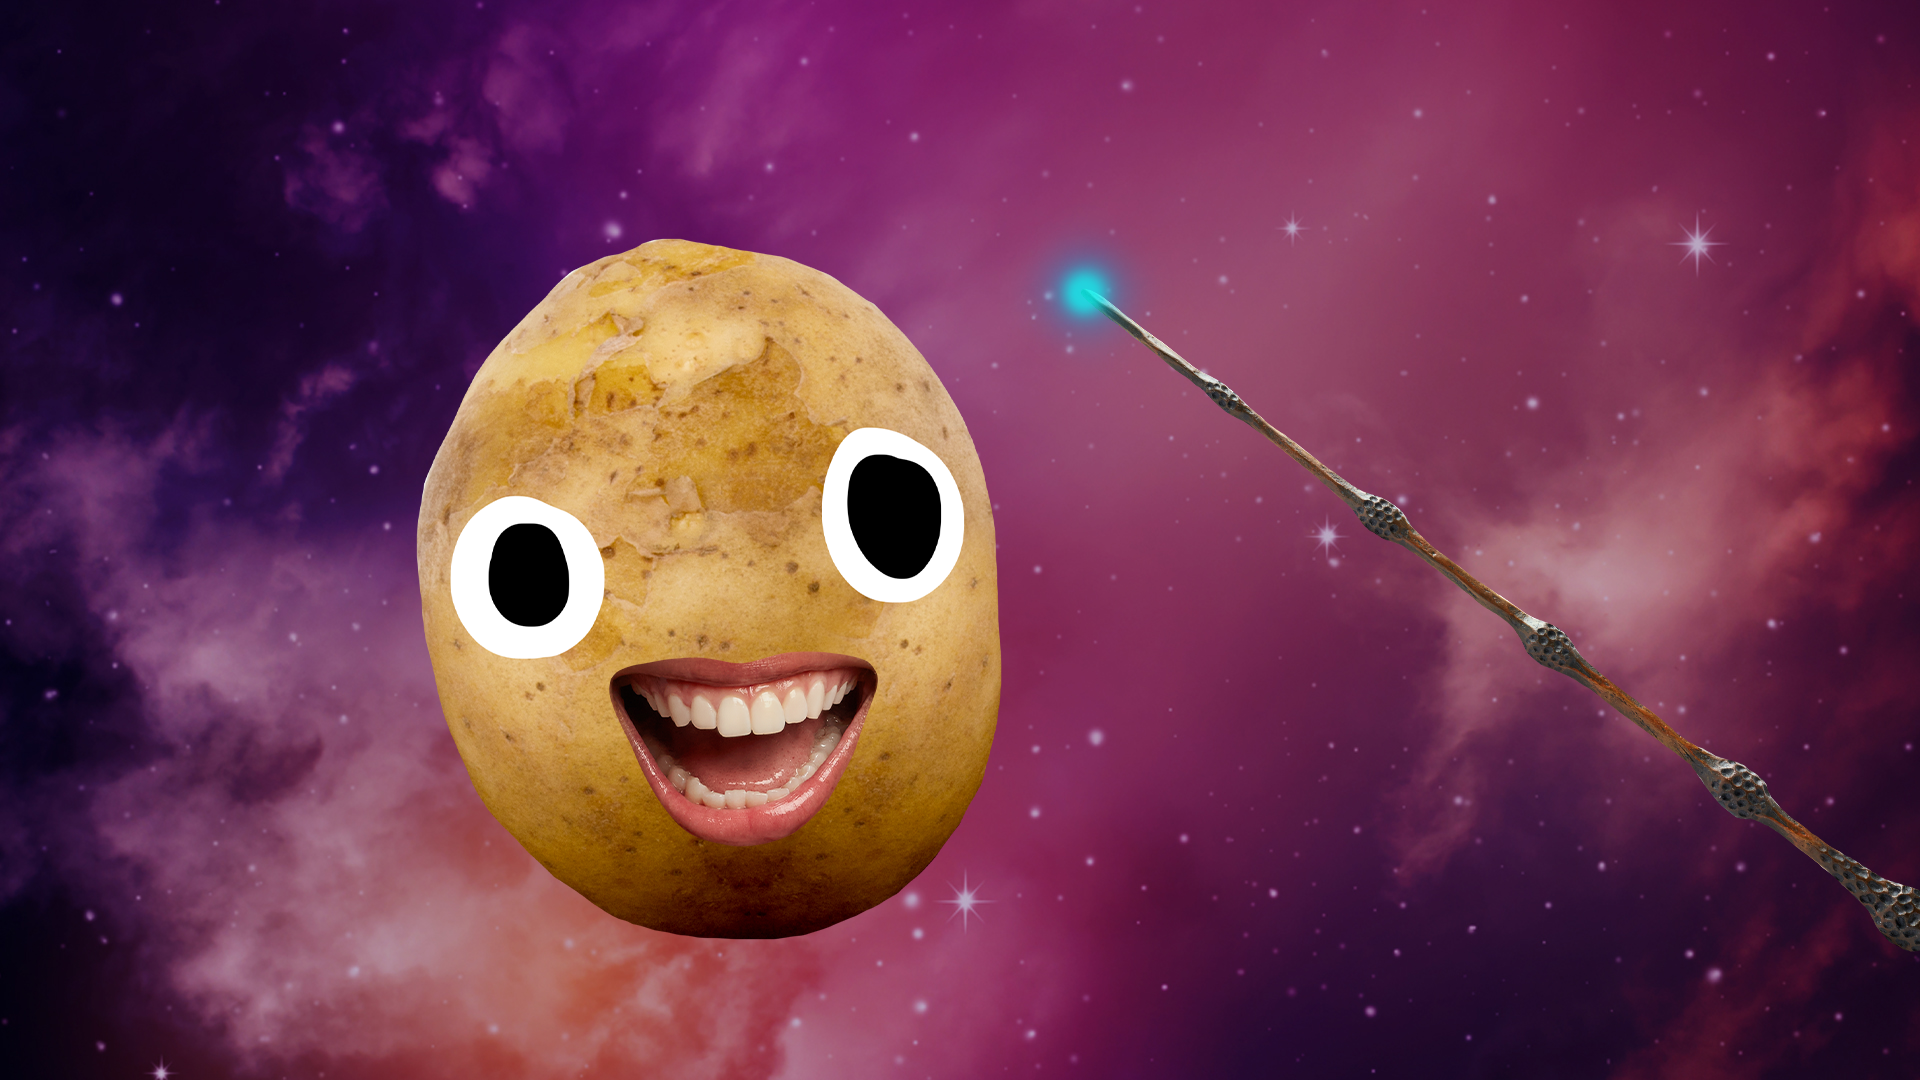 Potato face and wand